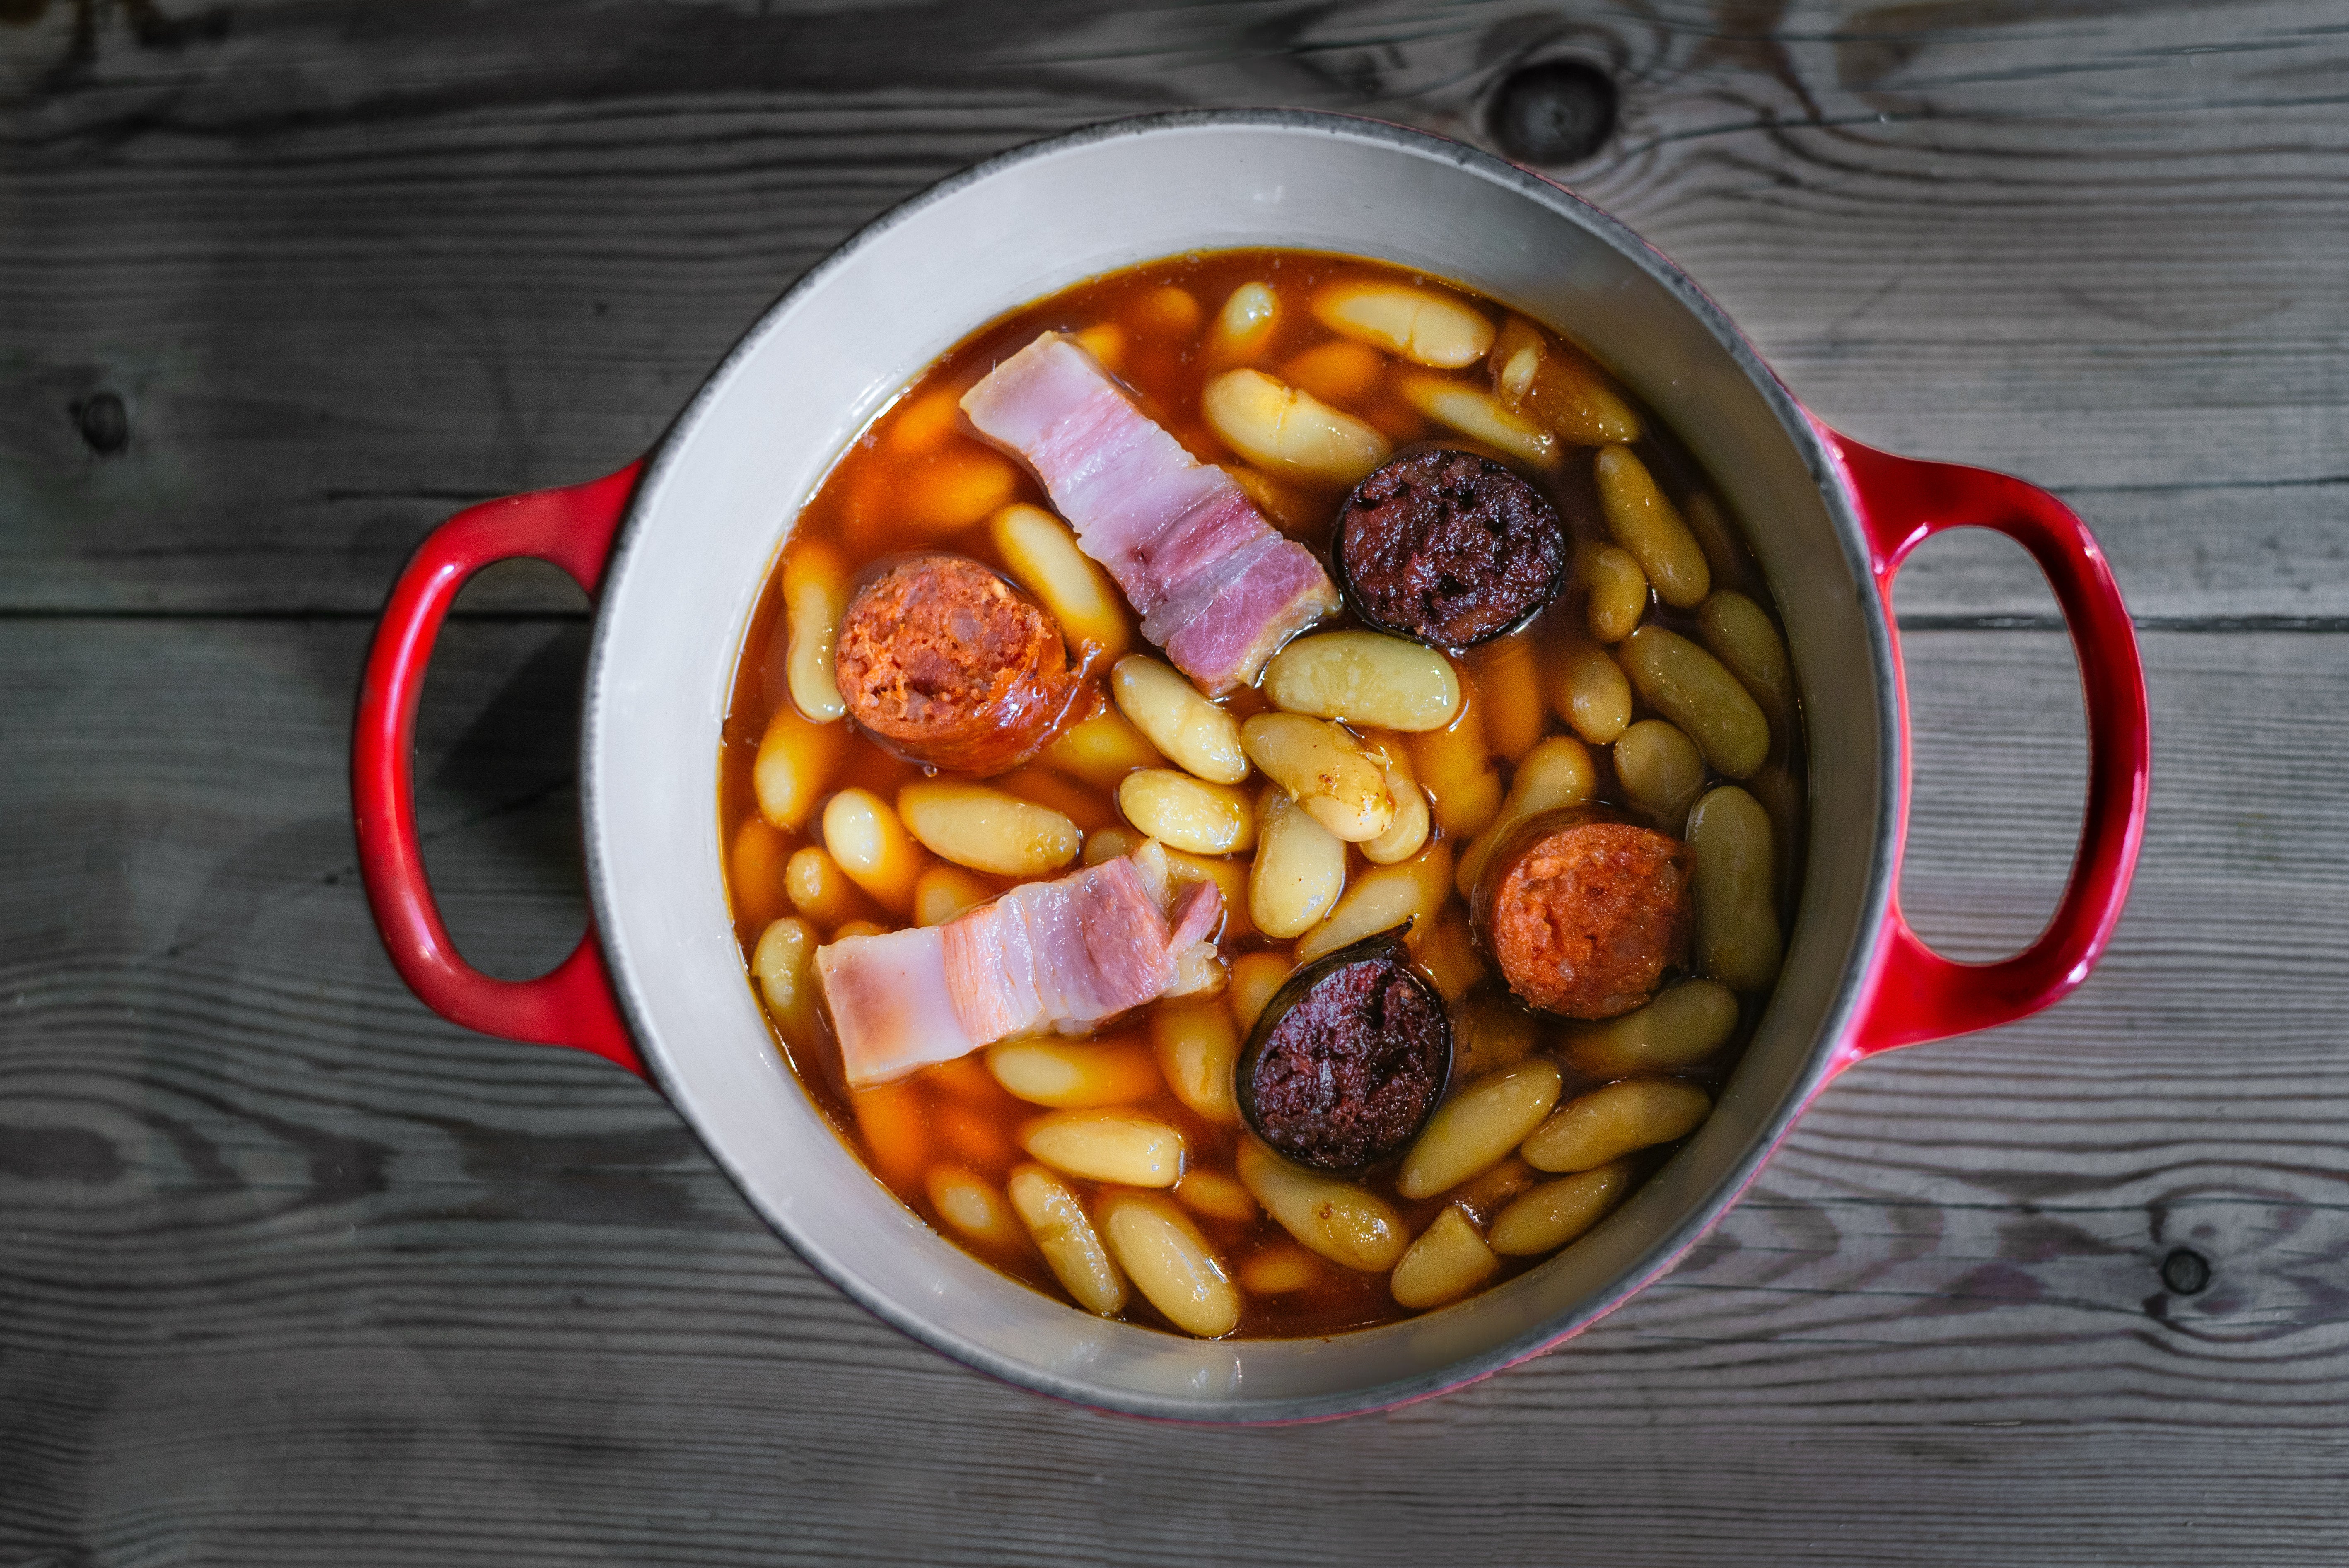 Fabada Asturiana is a traditional stew